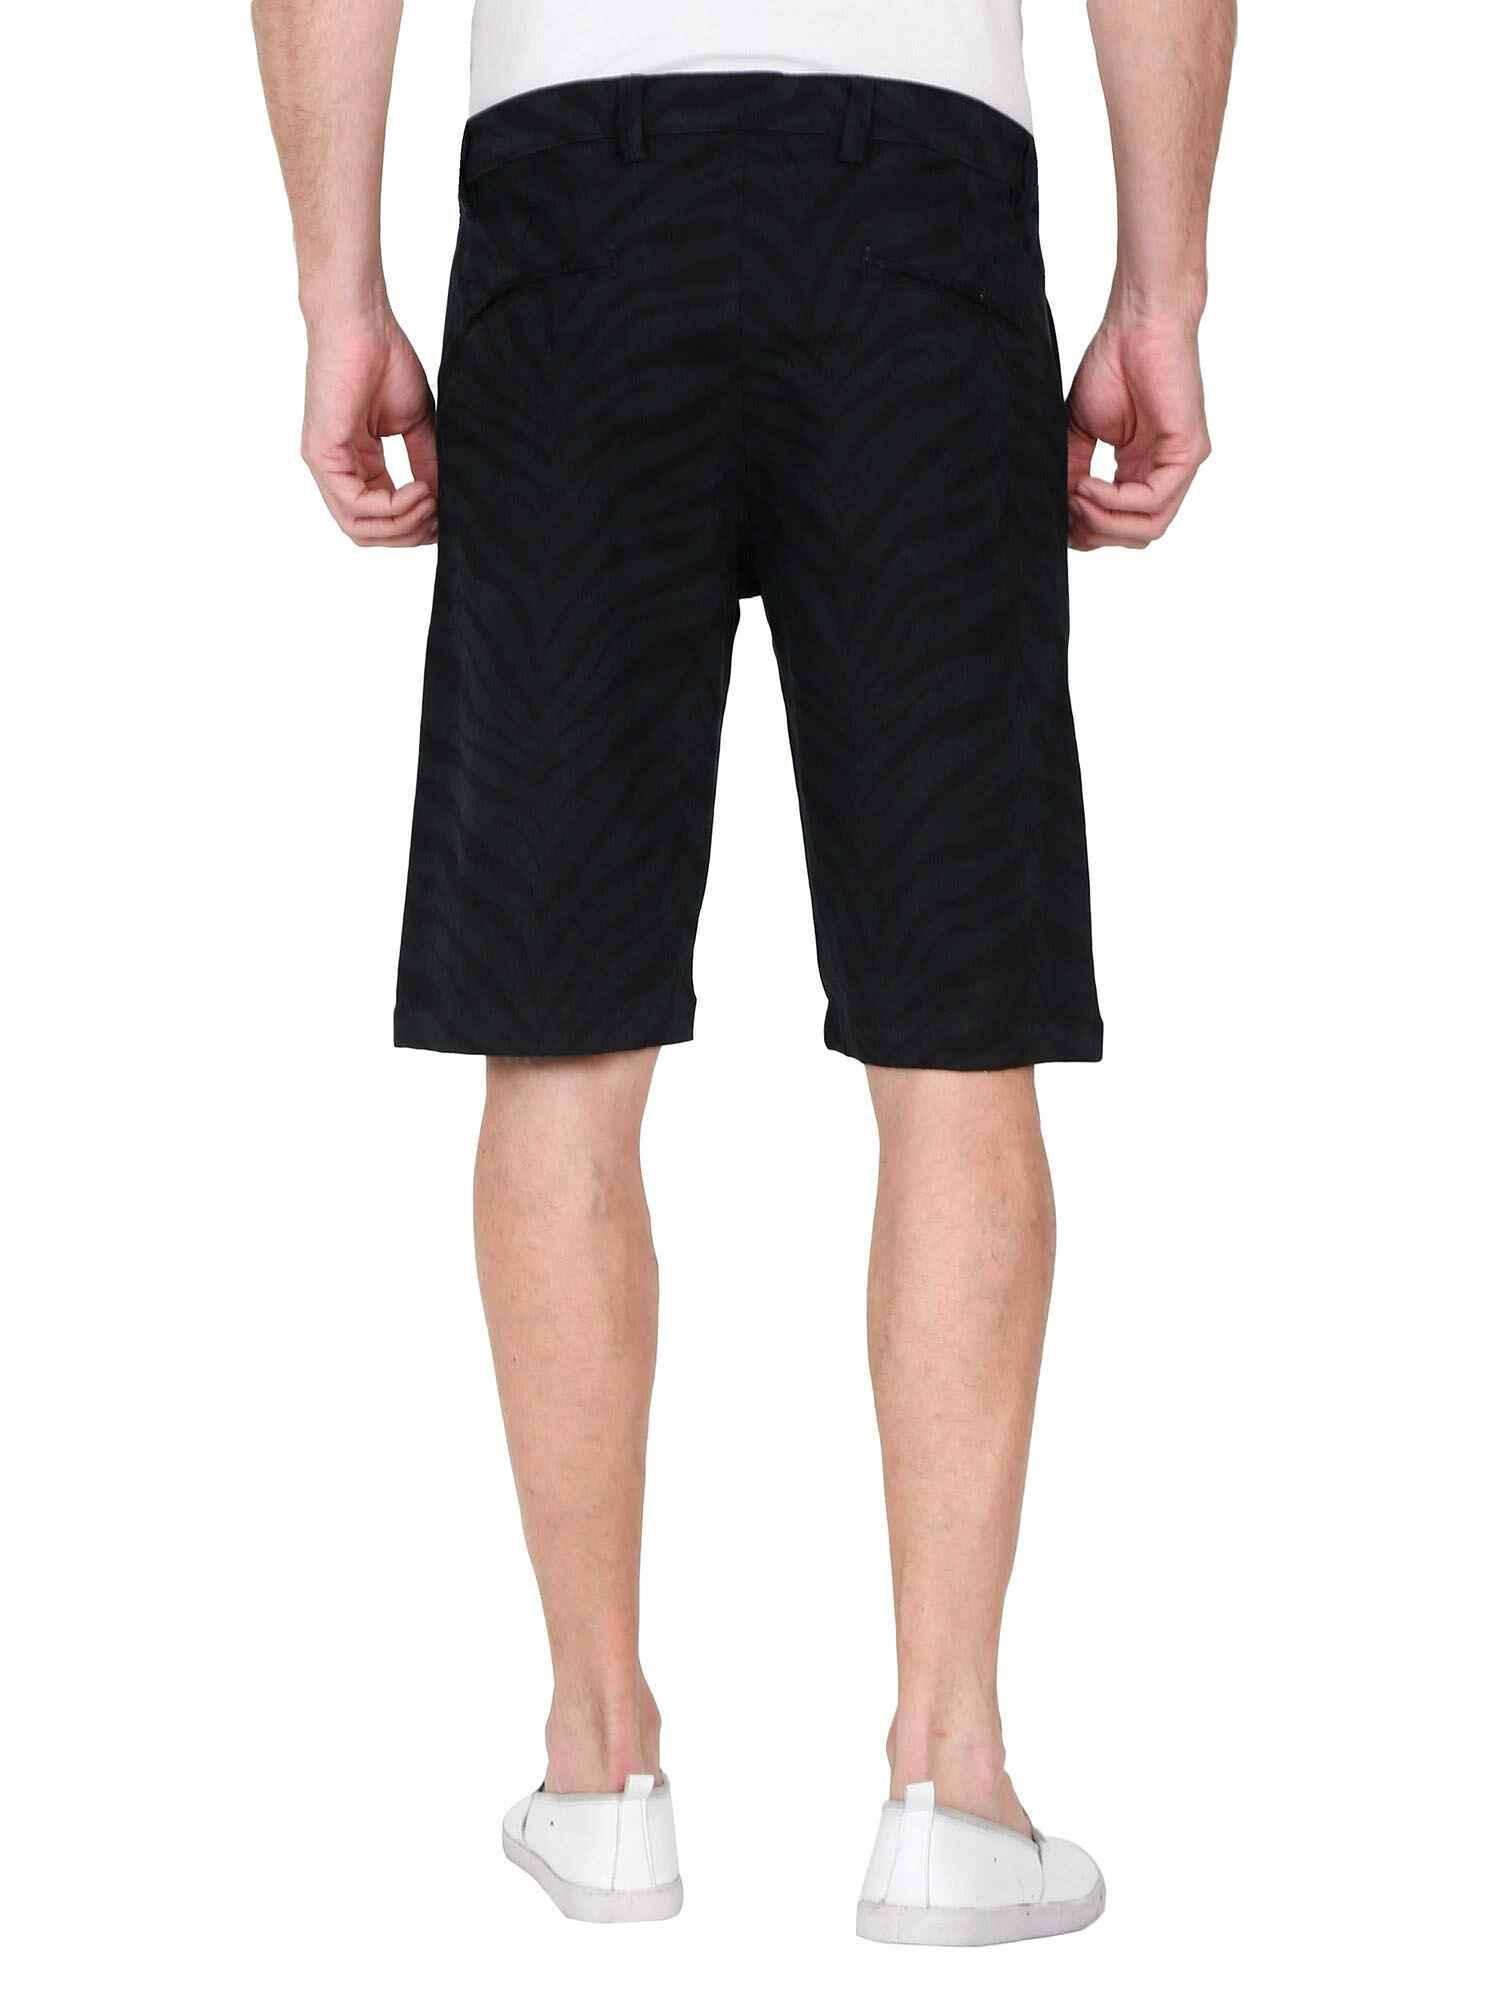 Eli Black Printed Shorts Men's Plus Size - Guniaa Fashions